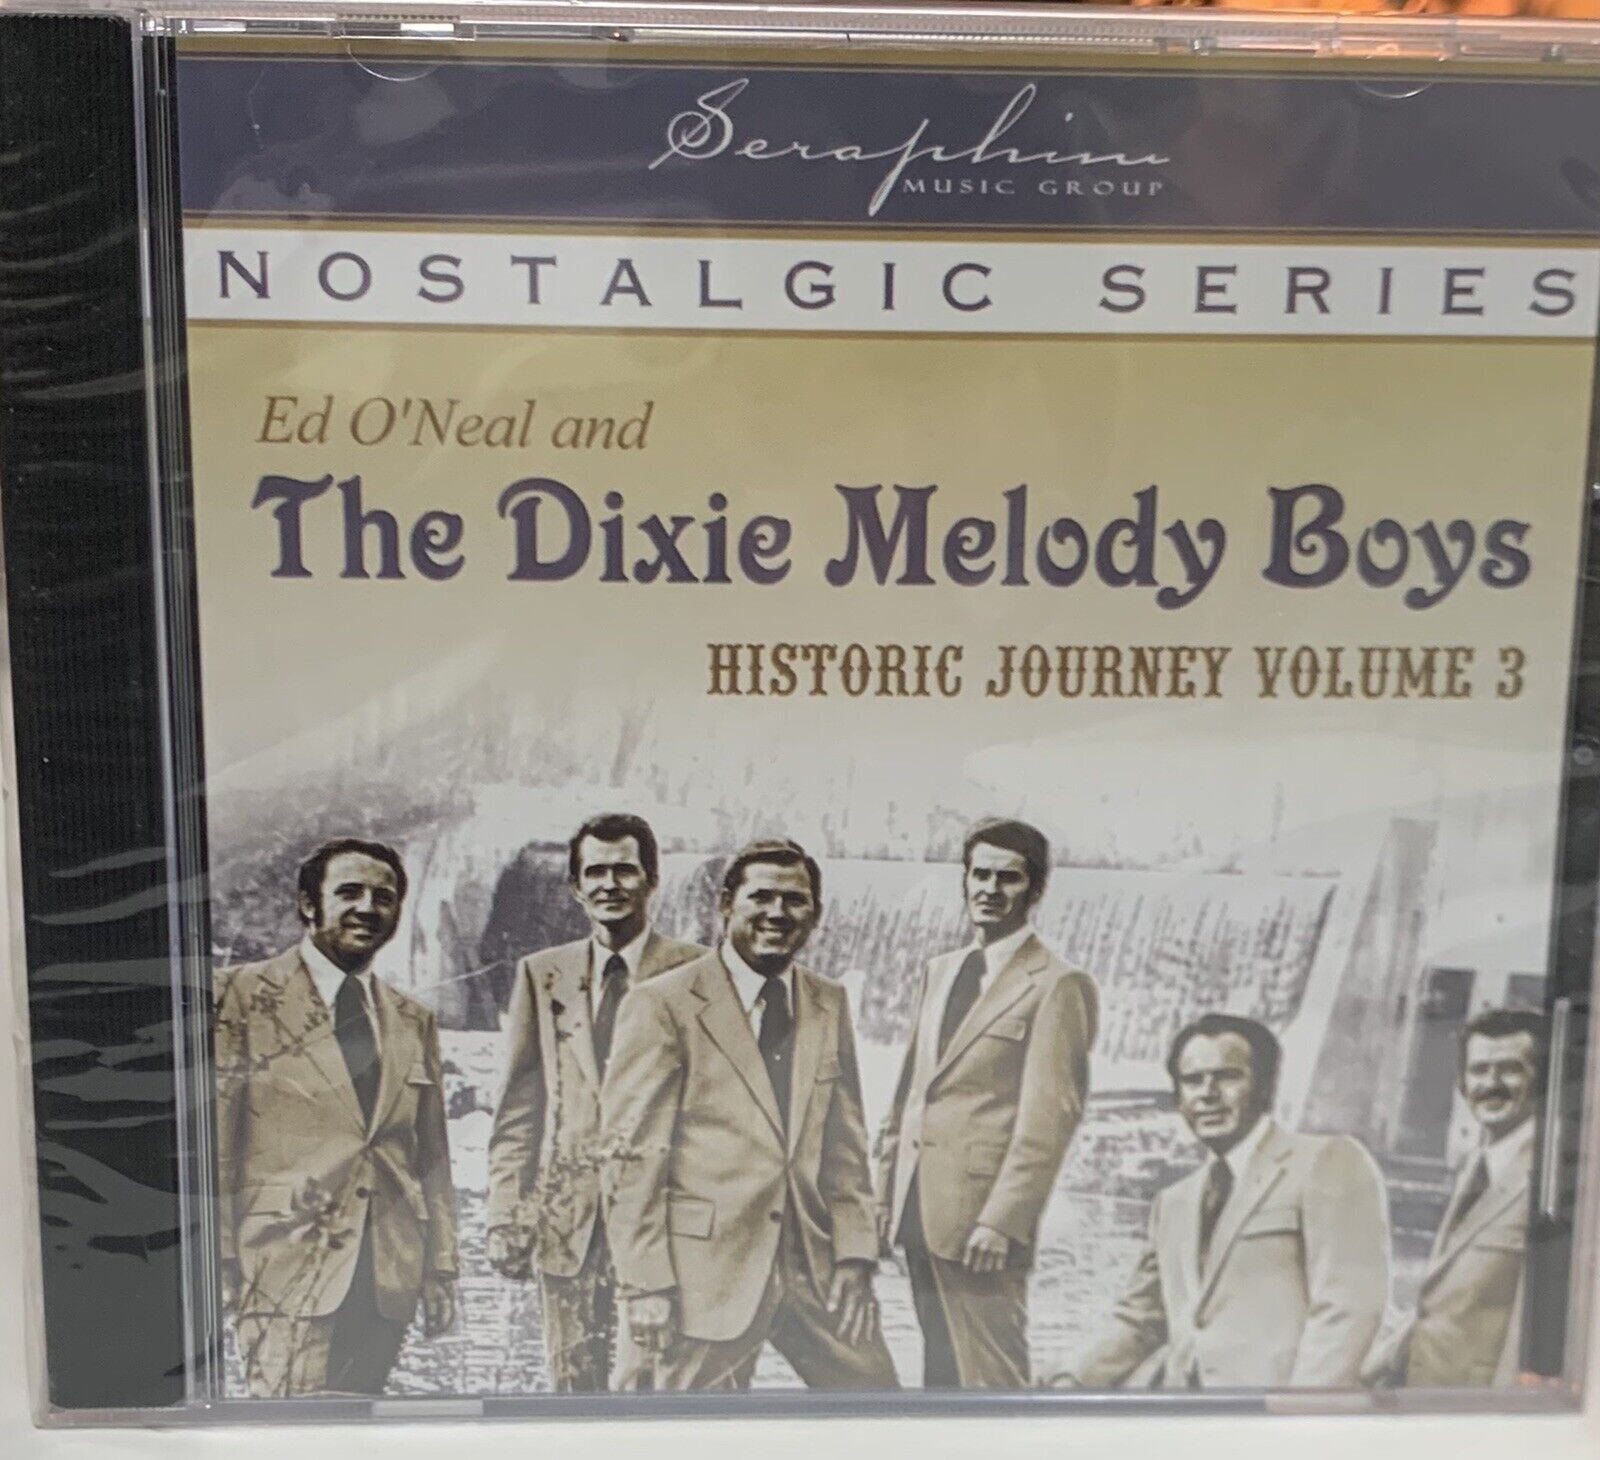 Ed O’Neal and The Dixie Melody Boys Historic Journey Volume 3, Nostalgic Series